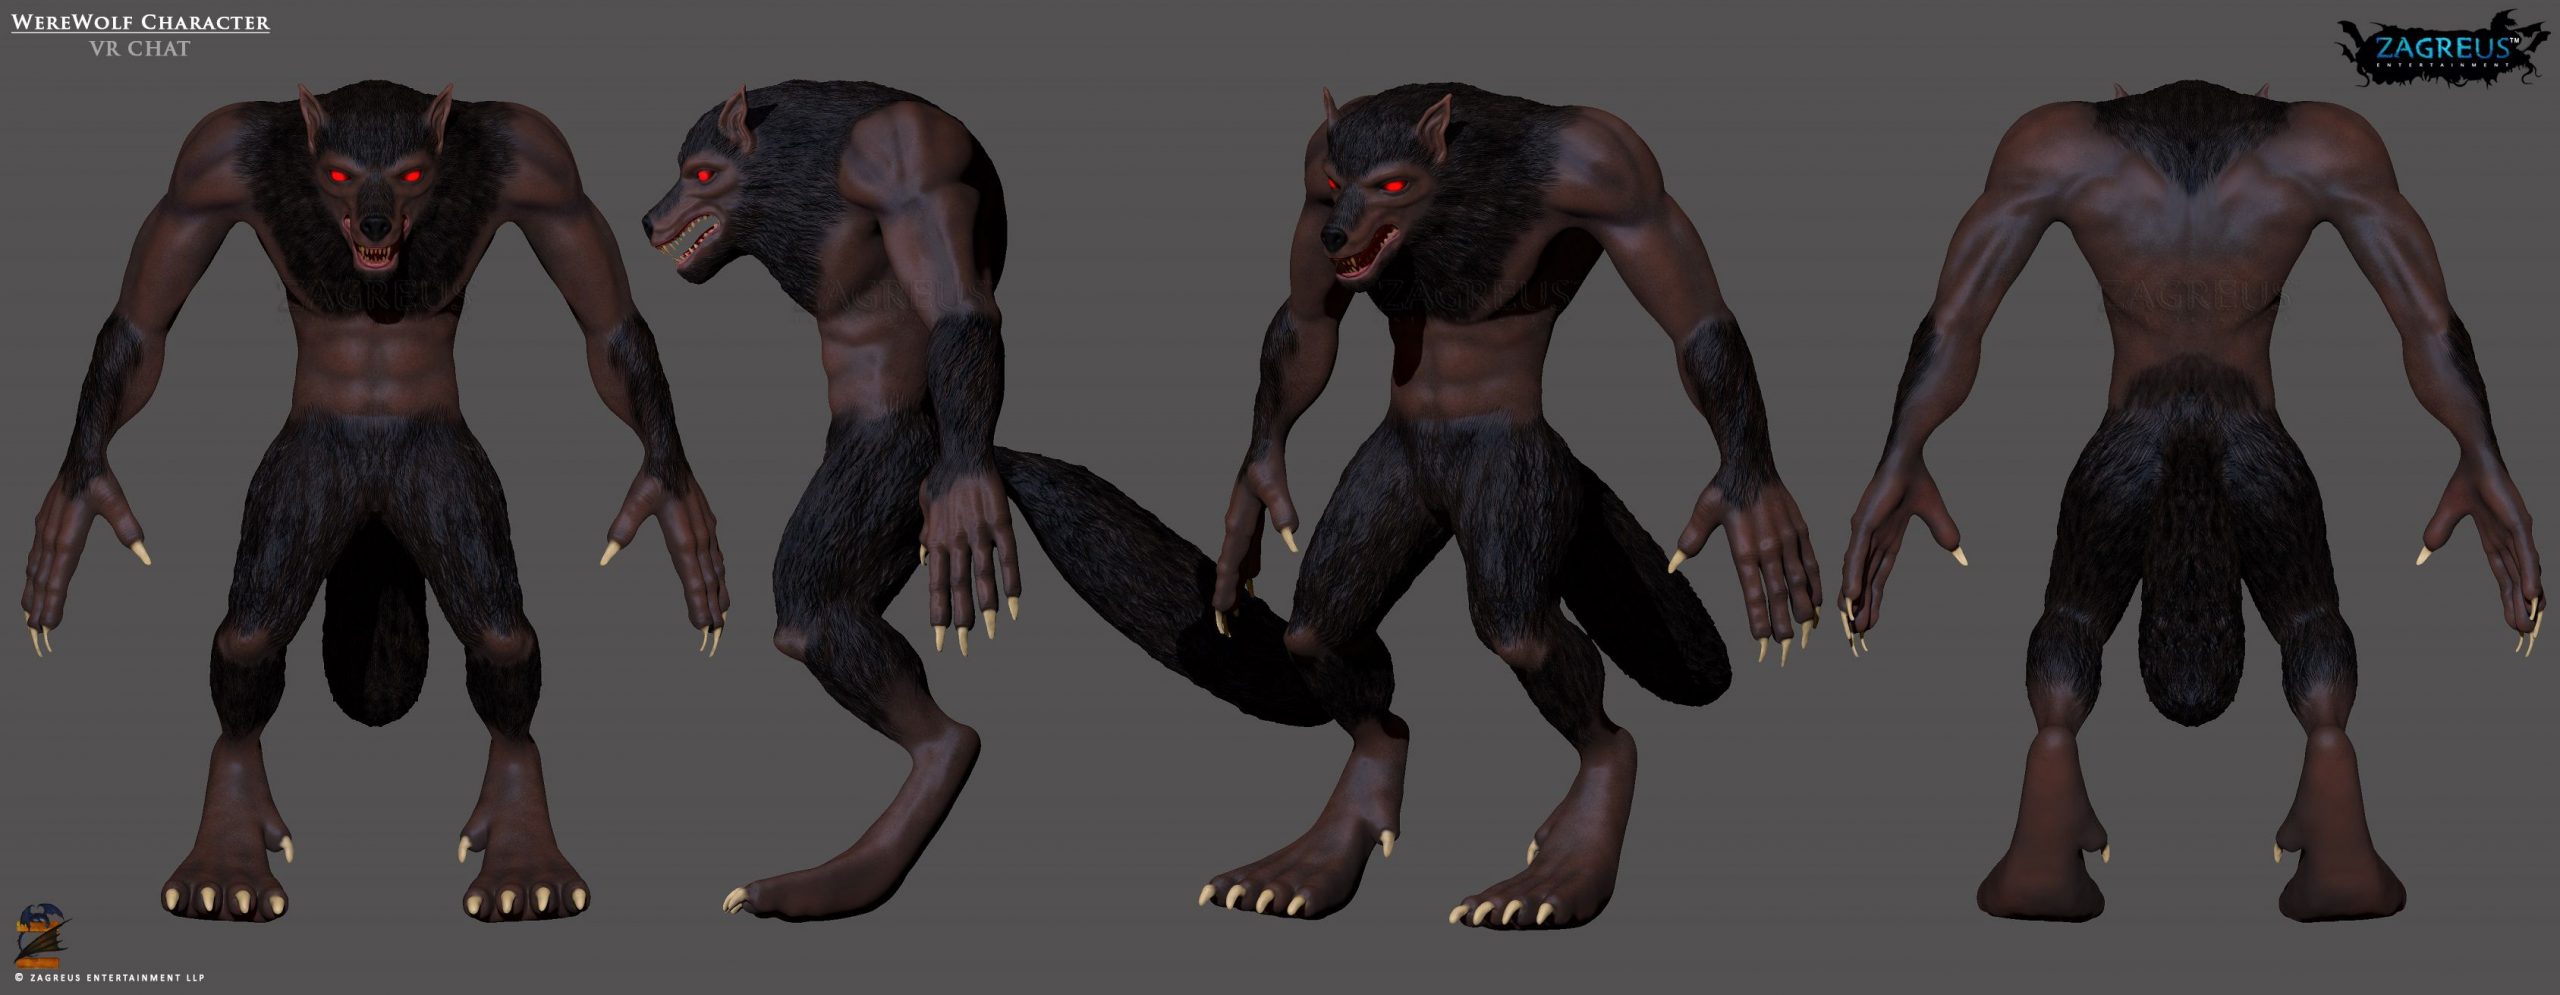 Werewolf Character Vr Chat Unity Zagreus Ent